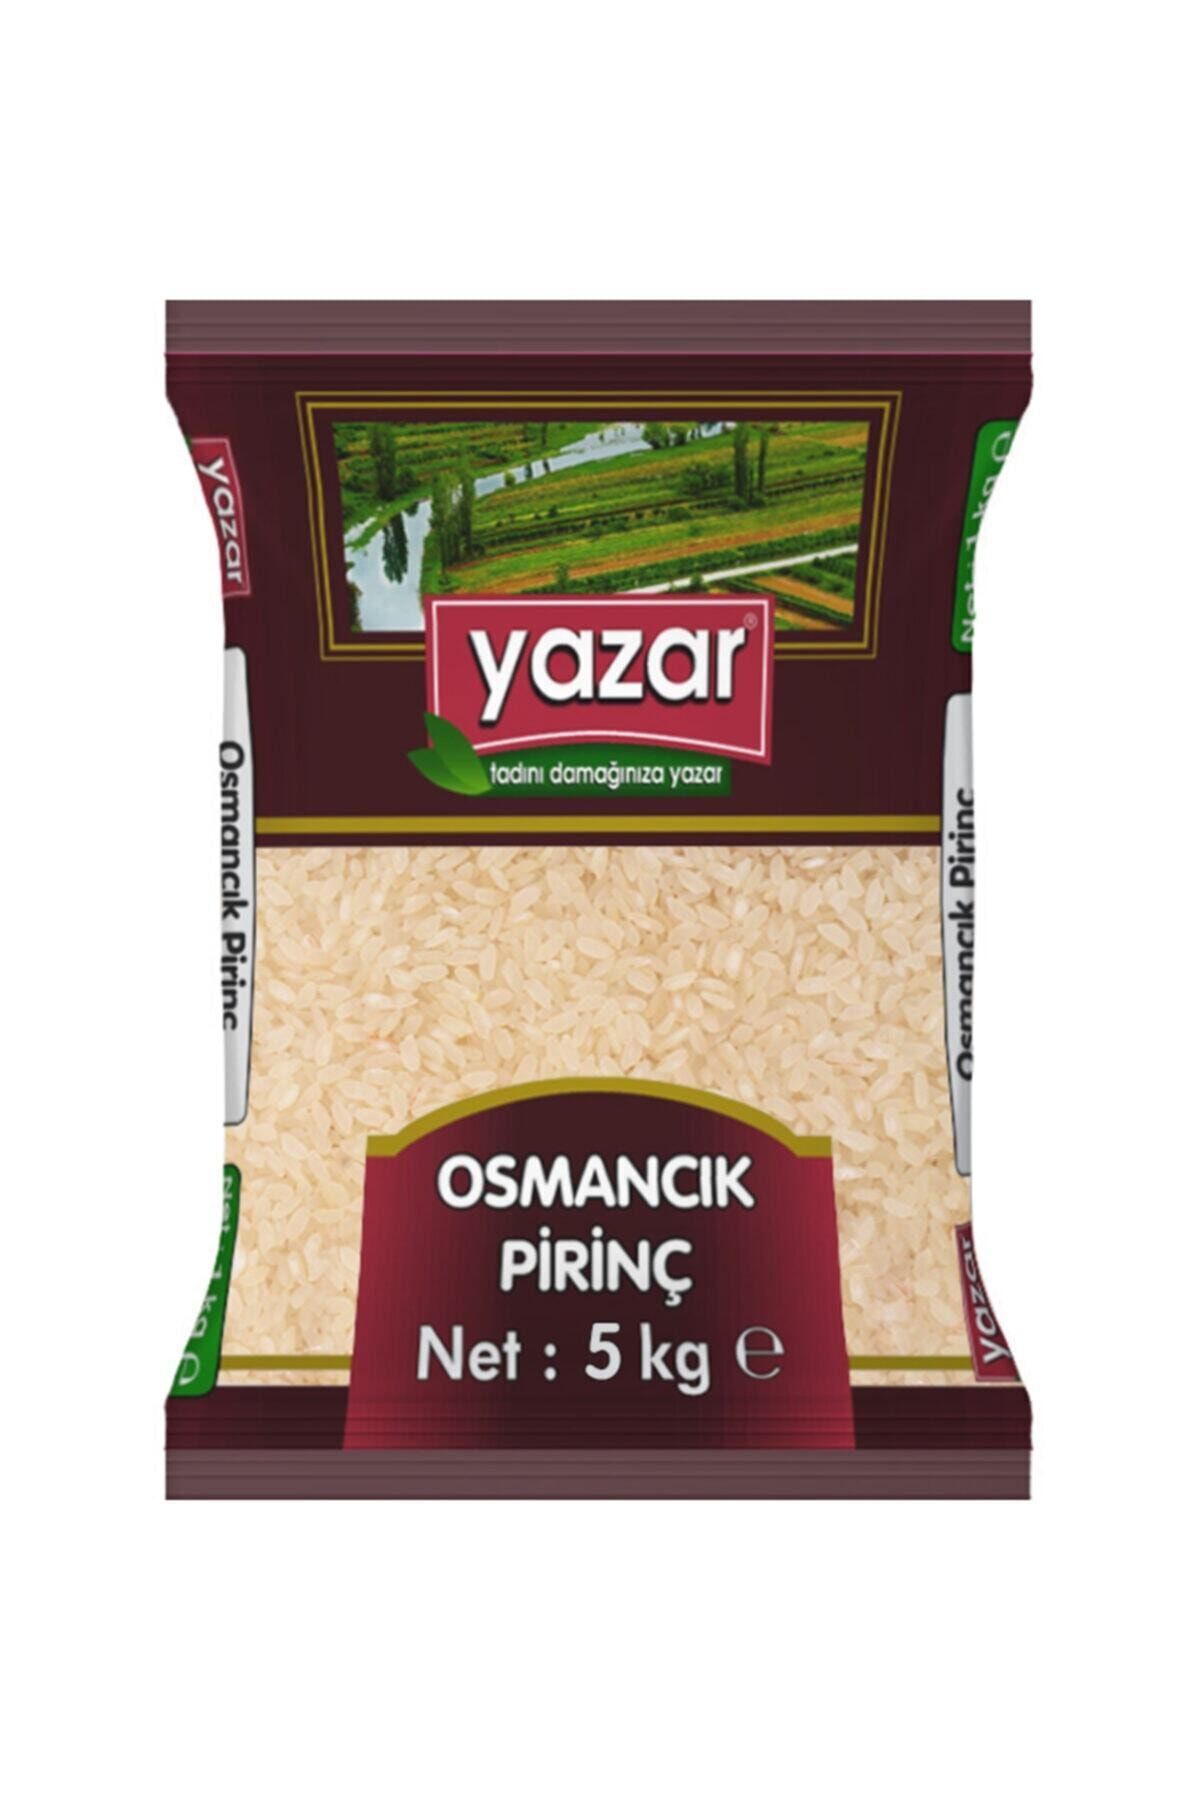 YAZAR Osmancık Pirinç 5 Kg.